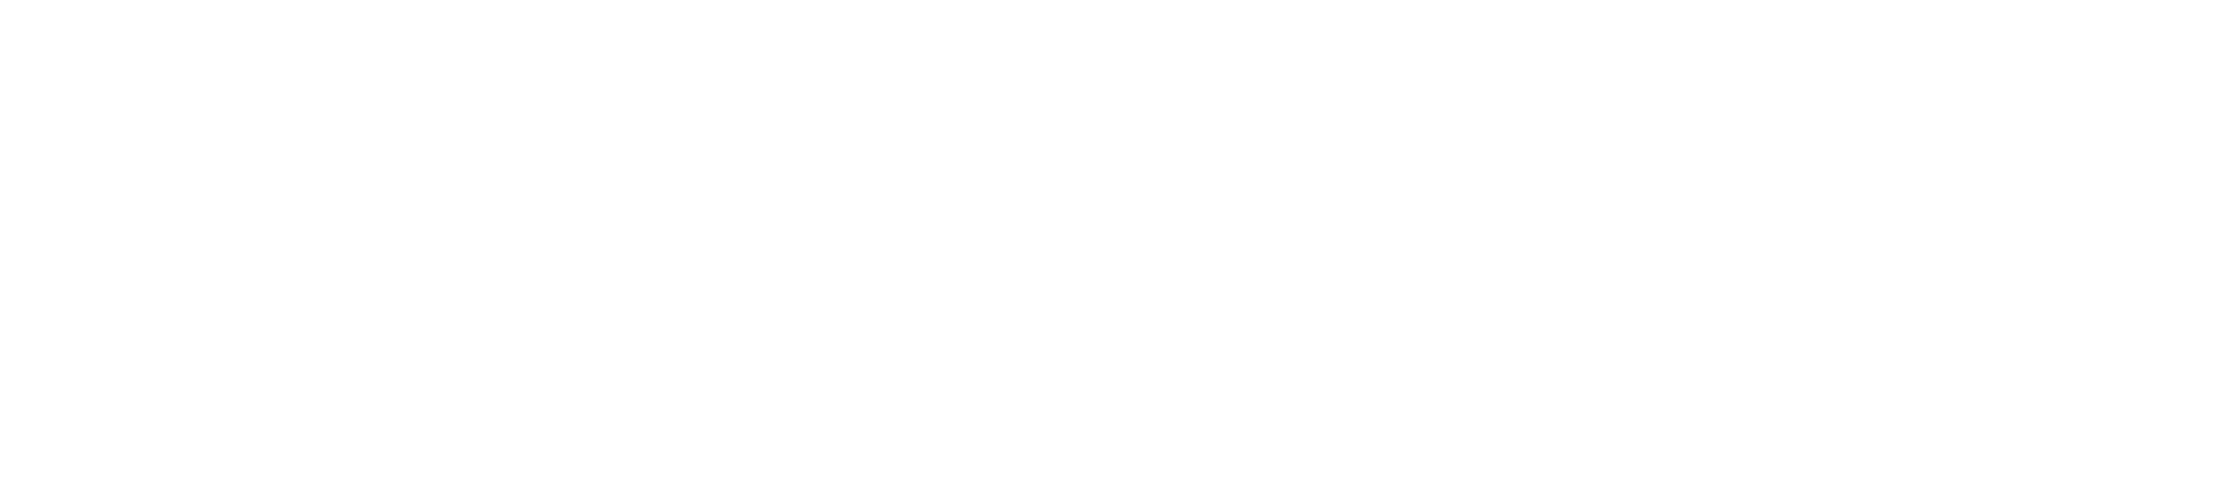 logo exkuus